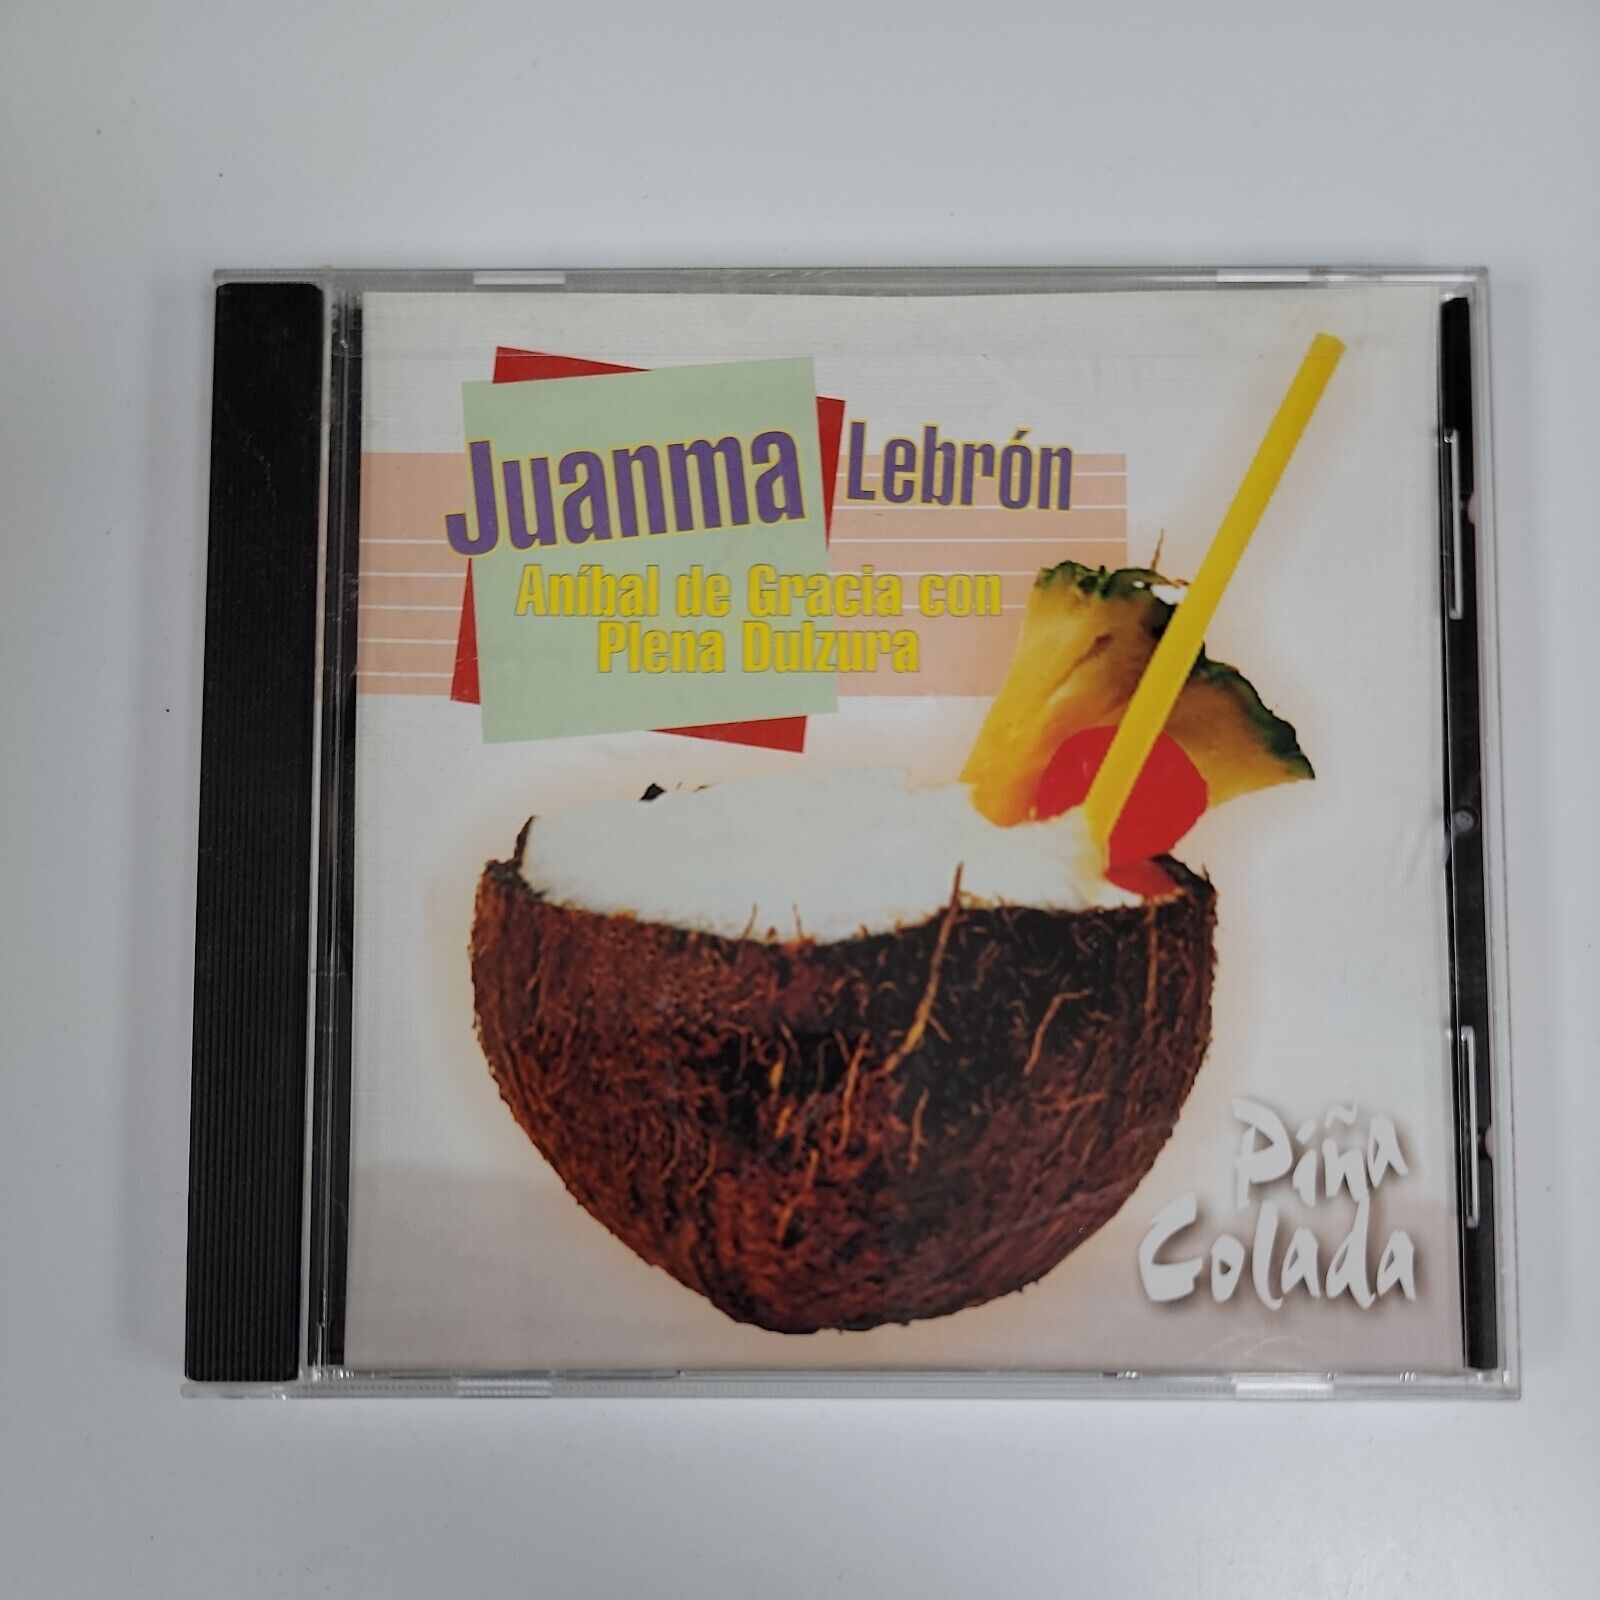 SUPER RARO CD JUANMA LEBRON Anibal De Gracia Con Plena Dulzura EX